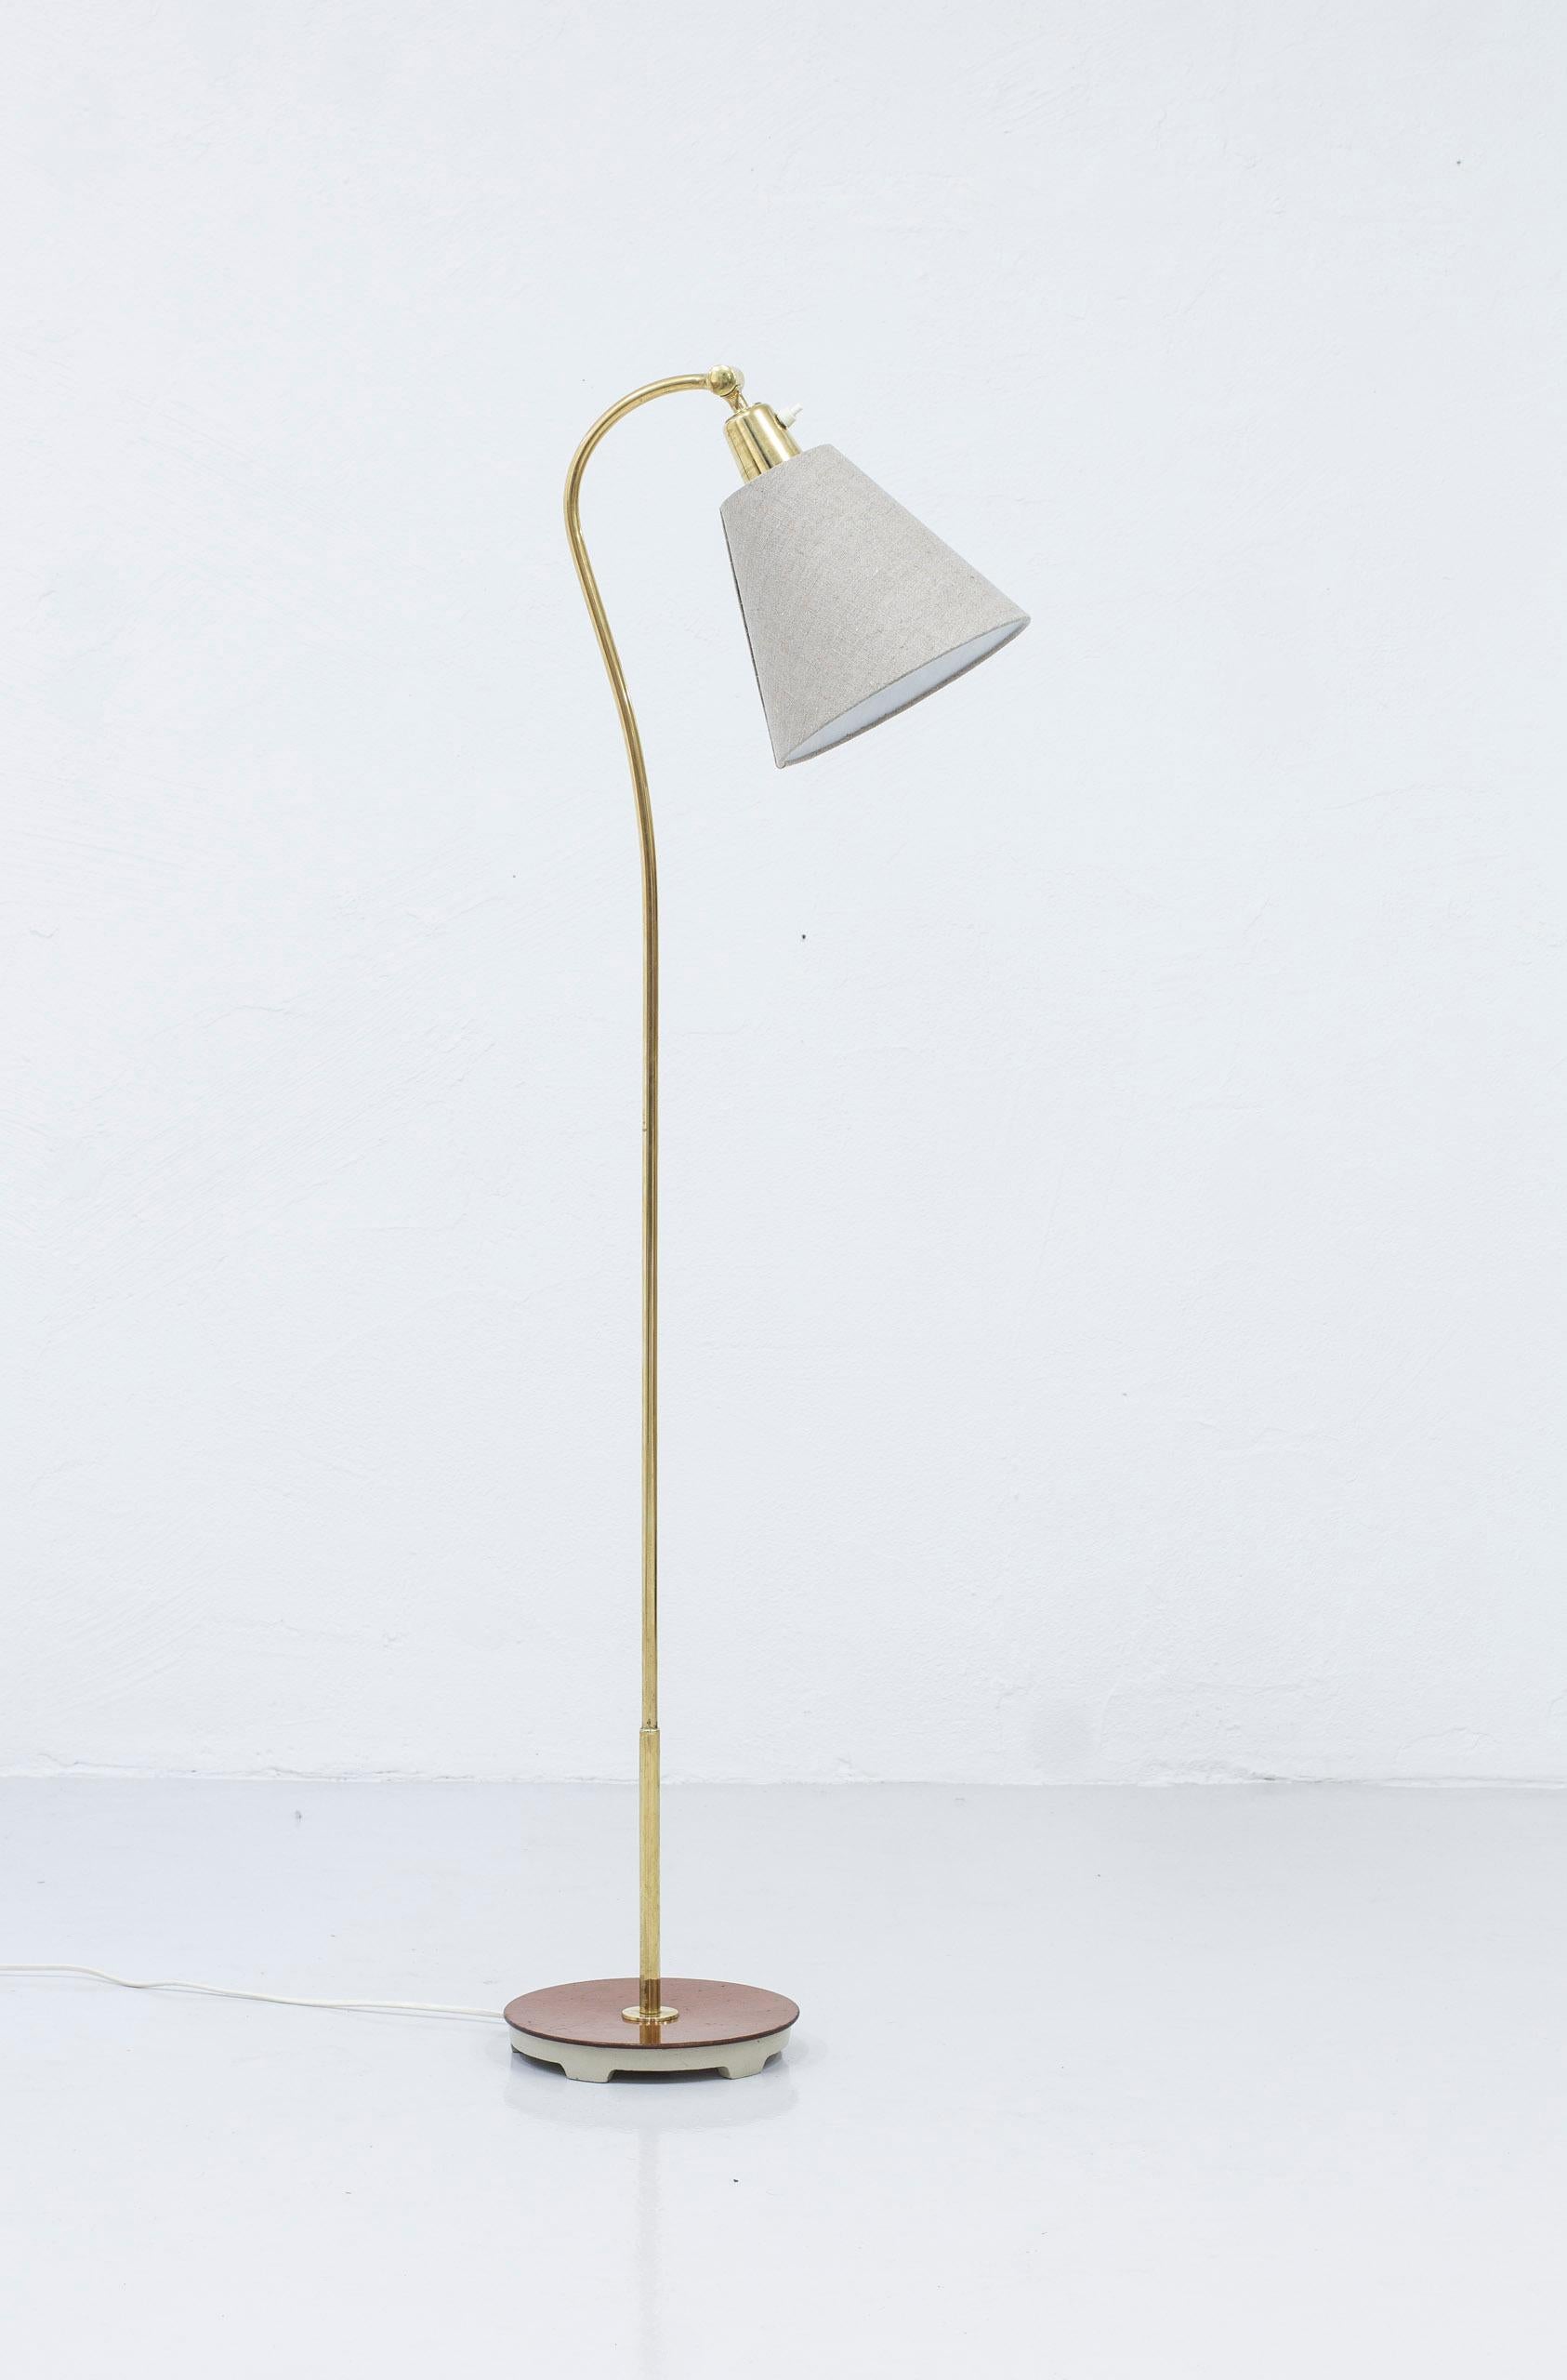 Scandinavian Modern Floor Lamp in Brass by Bertil Brisborg, Nordiska Kompaniet Swedish Modern, 1950s For Sale